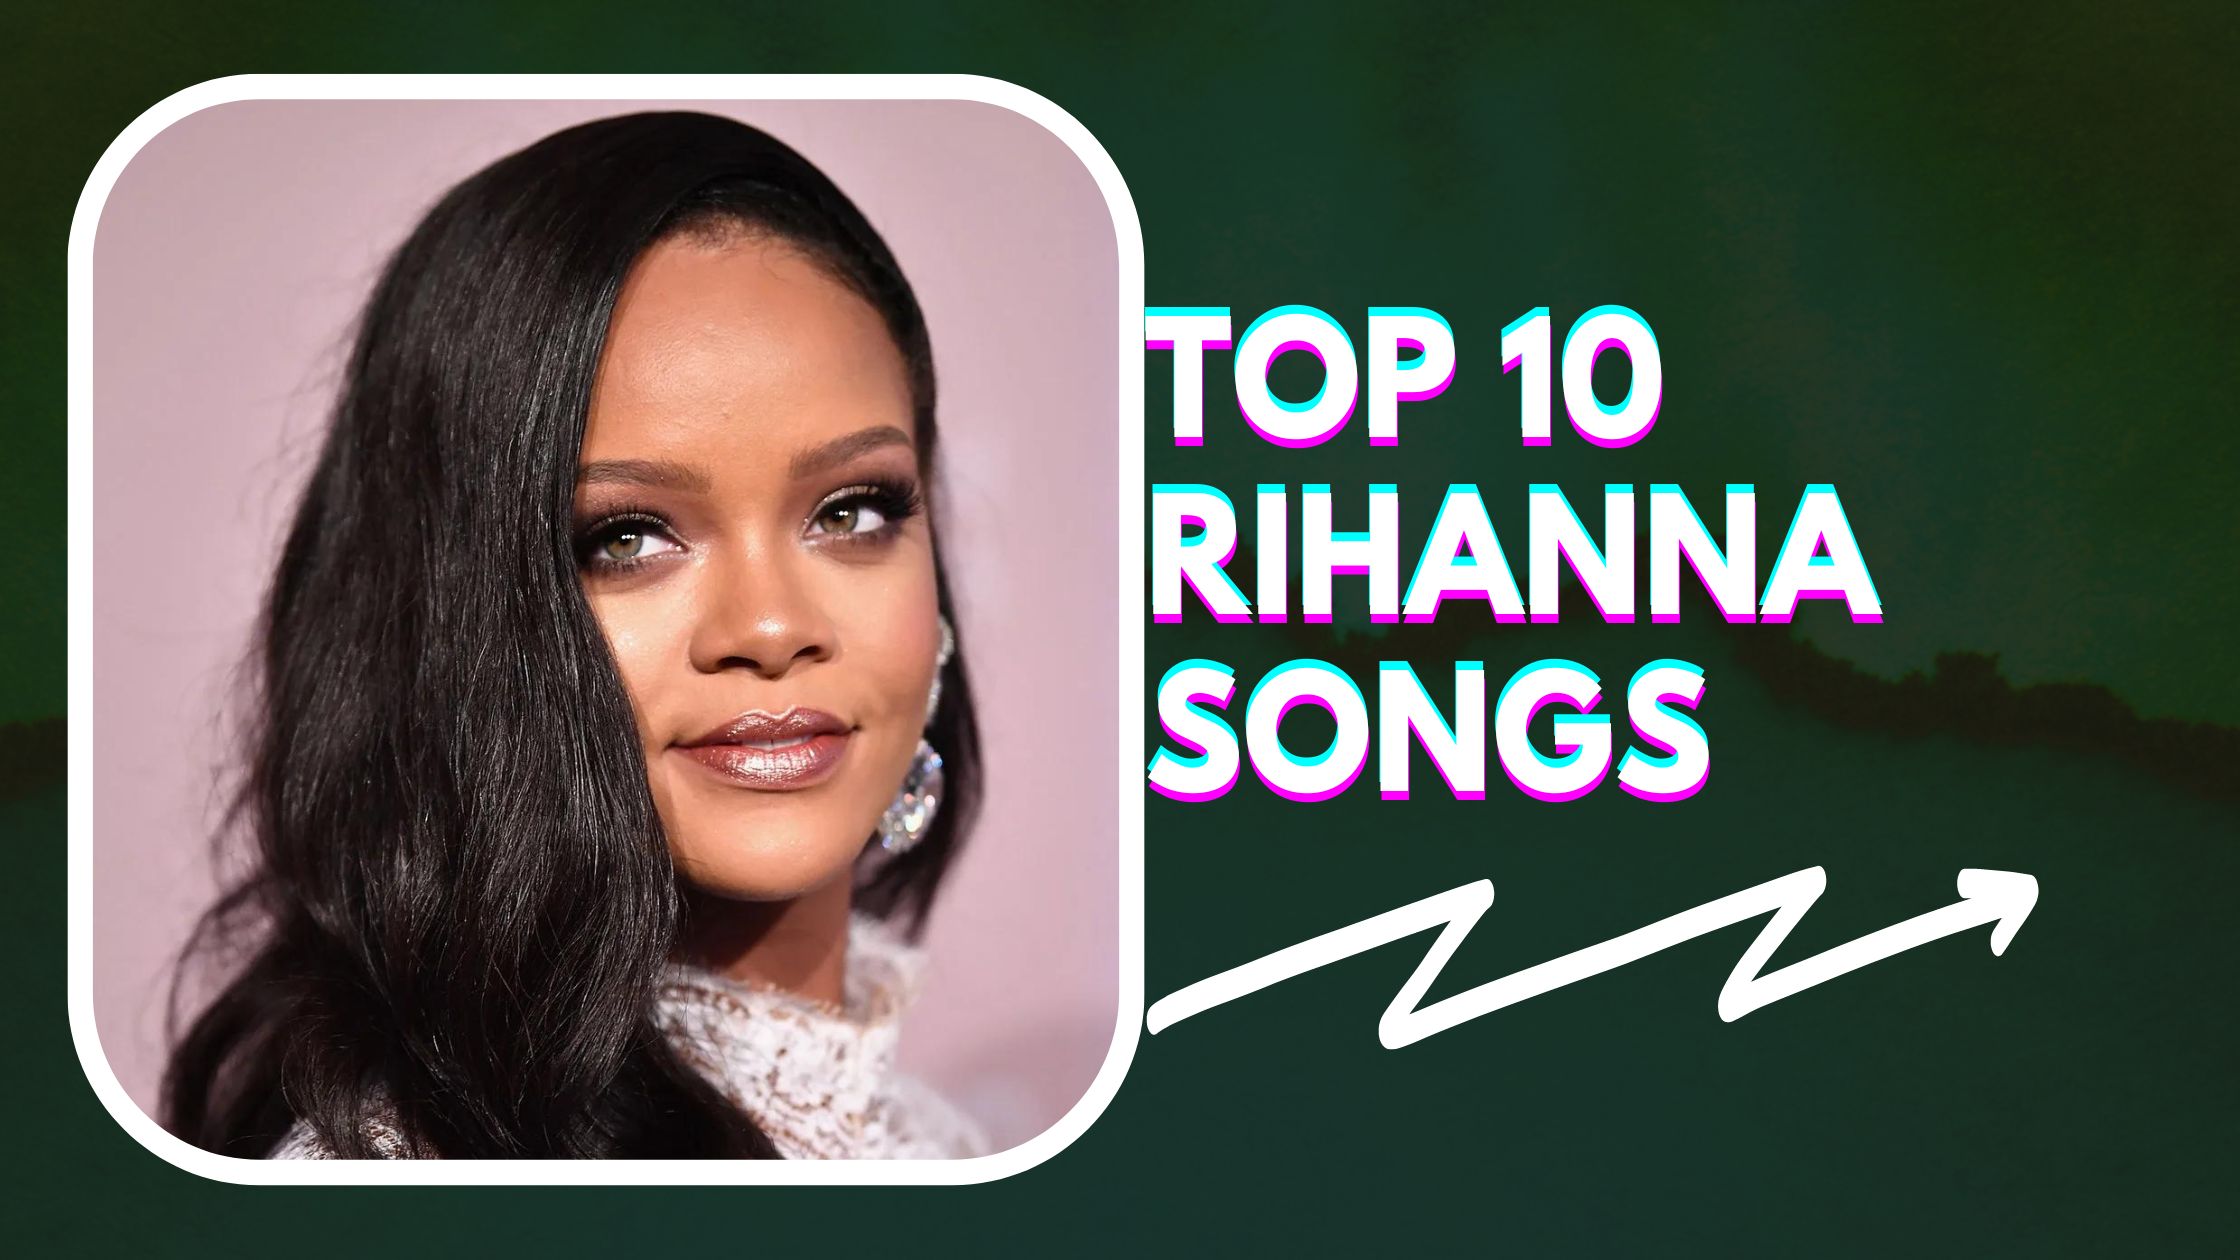 Top 10 Rihanna Songs